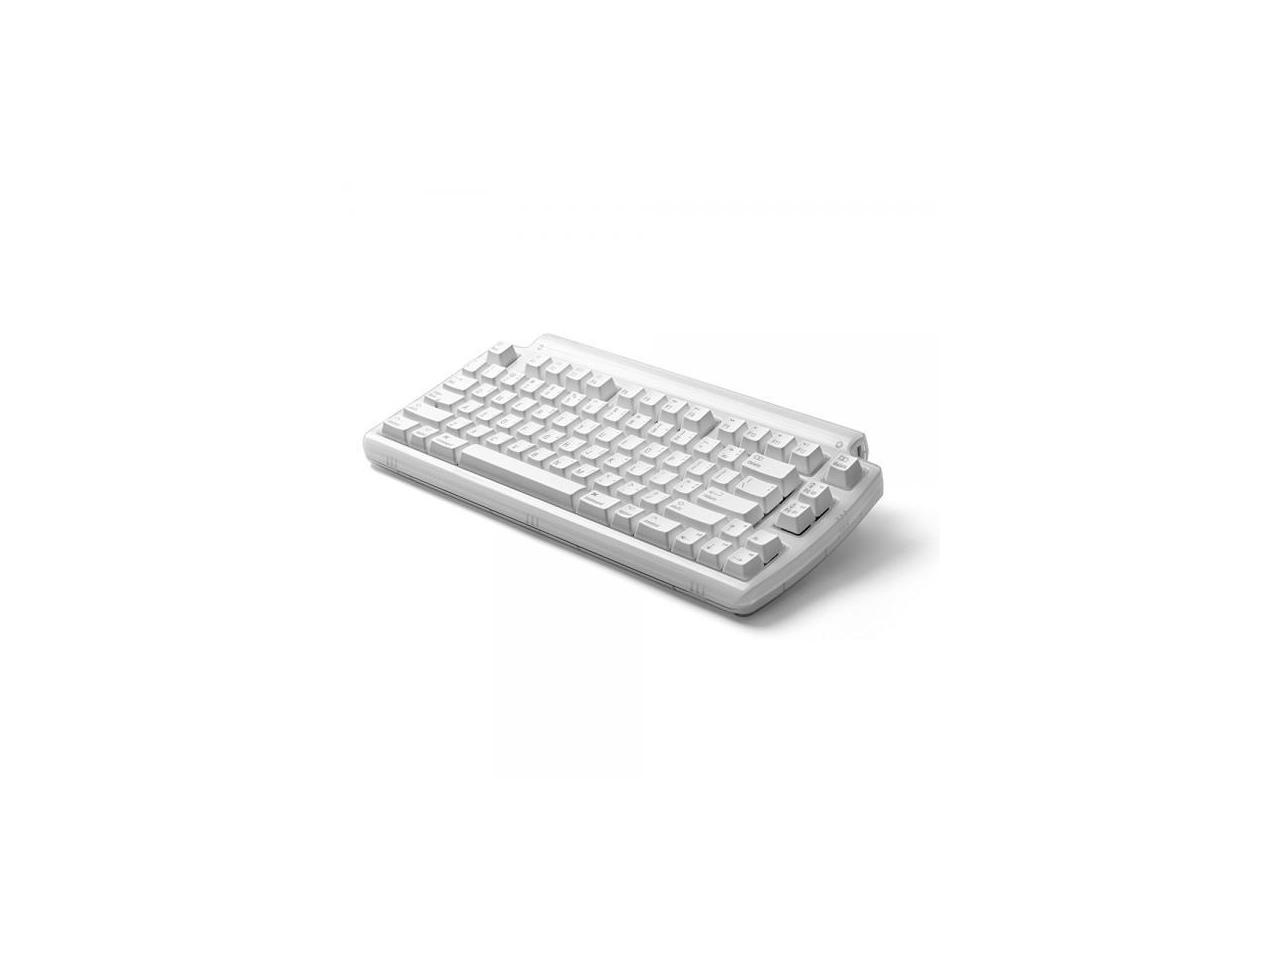 Matias Mini Tactile Pro For Mac Mechanical Keyboard (white - Newegg.com